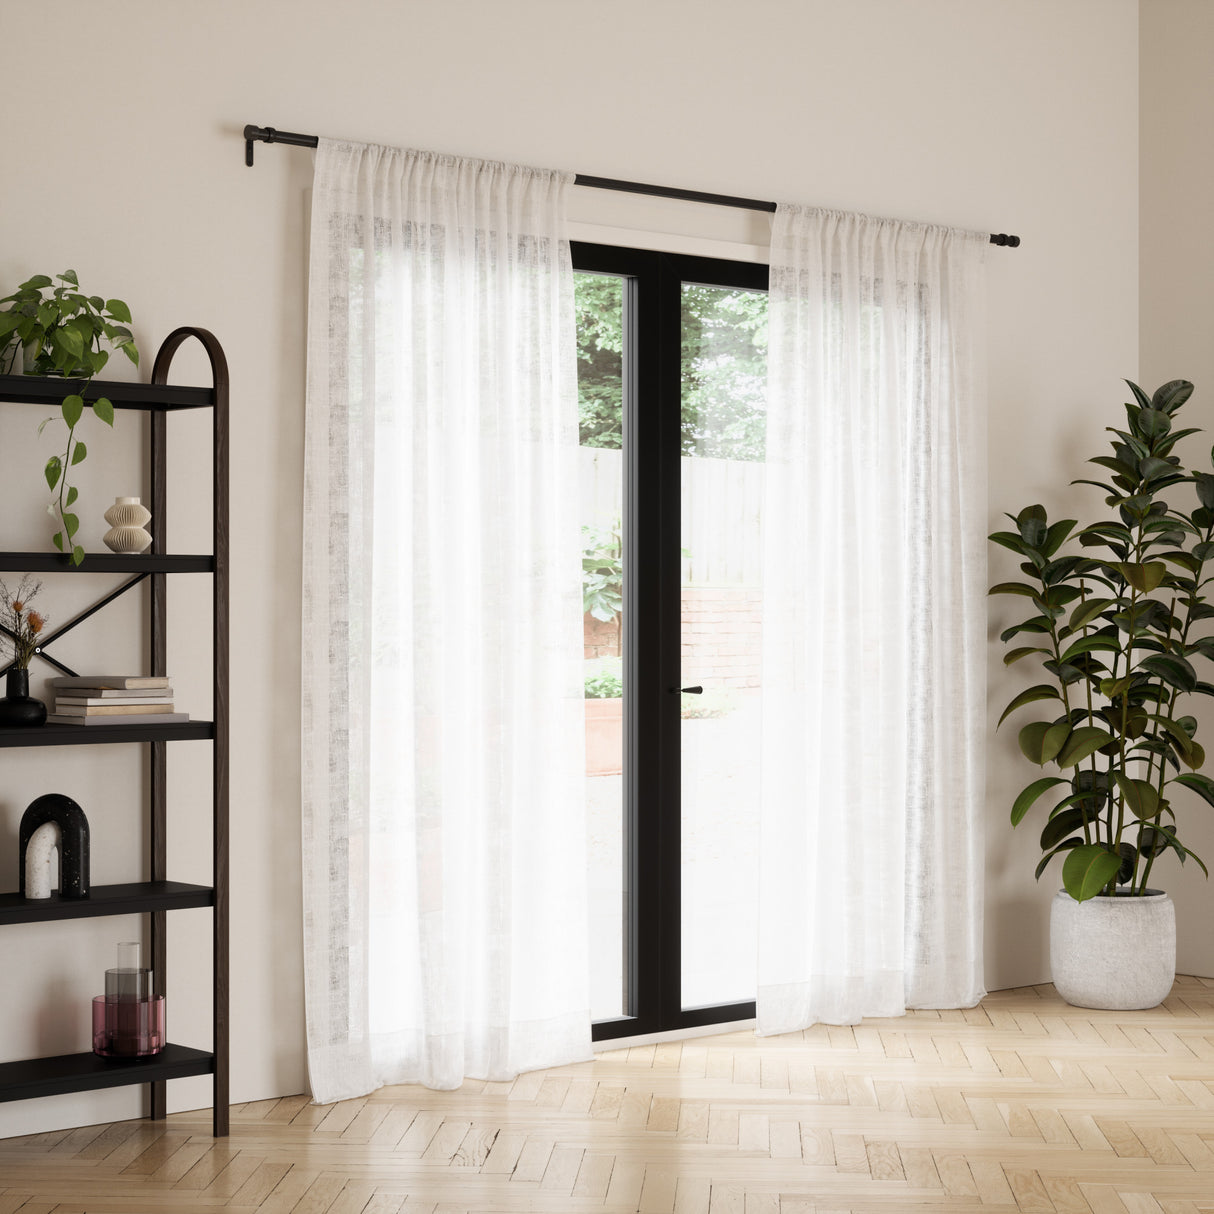 Single Curtain Rods | color: Brushed-Black | size: 36-66" (91-168 cm) | diameter: 1" (2.5 cm)